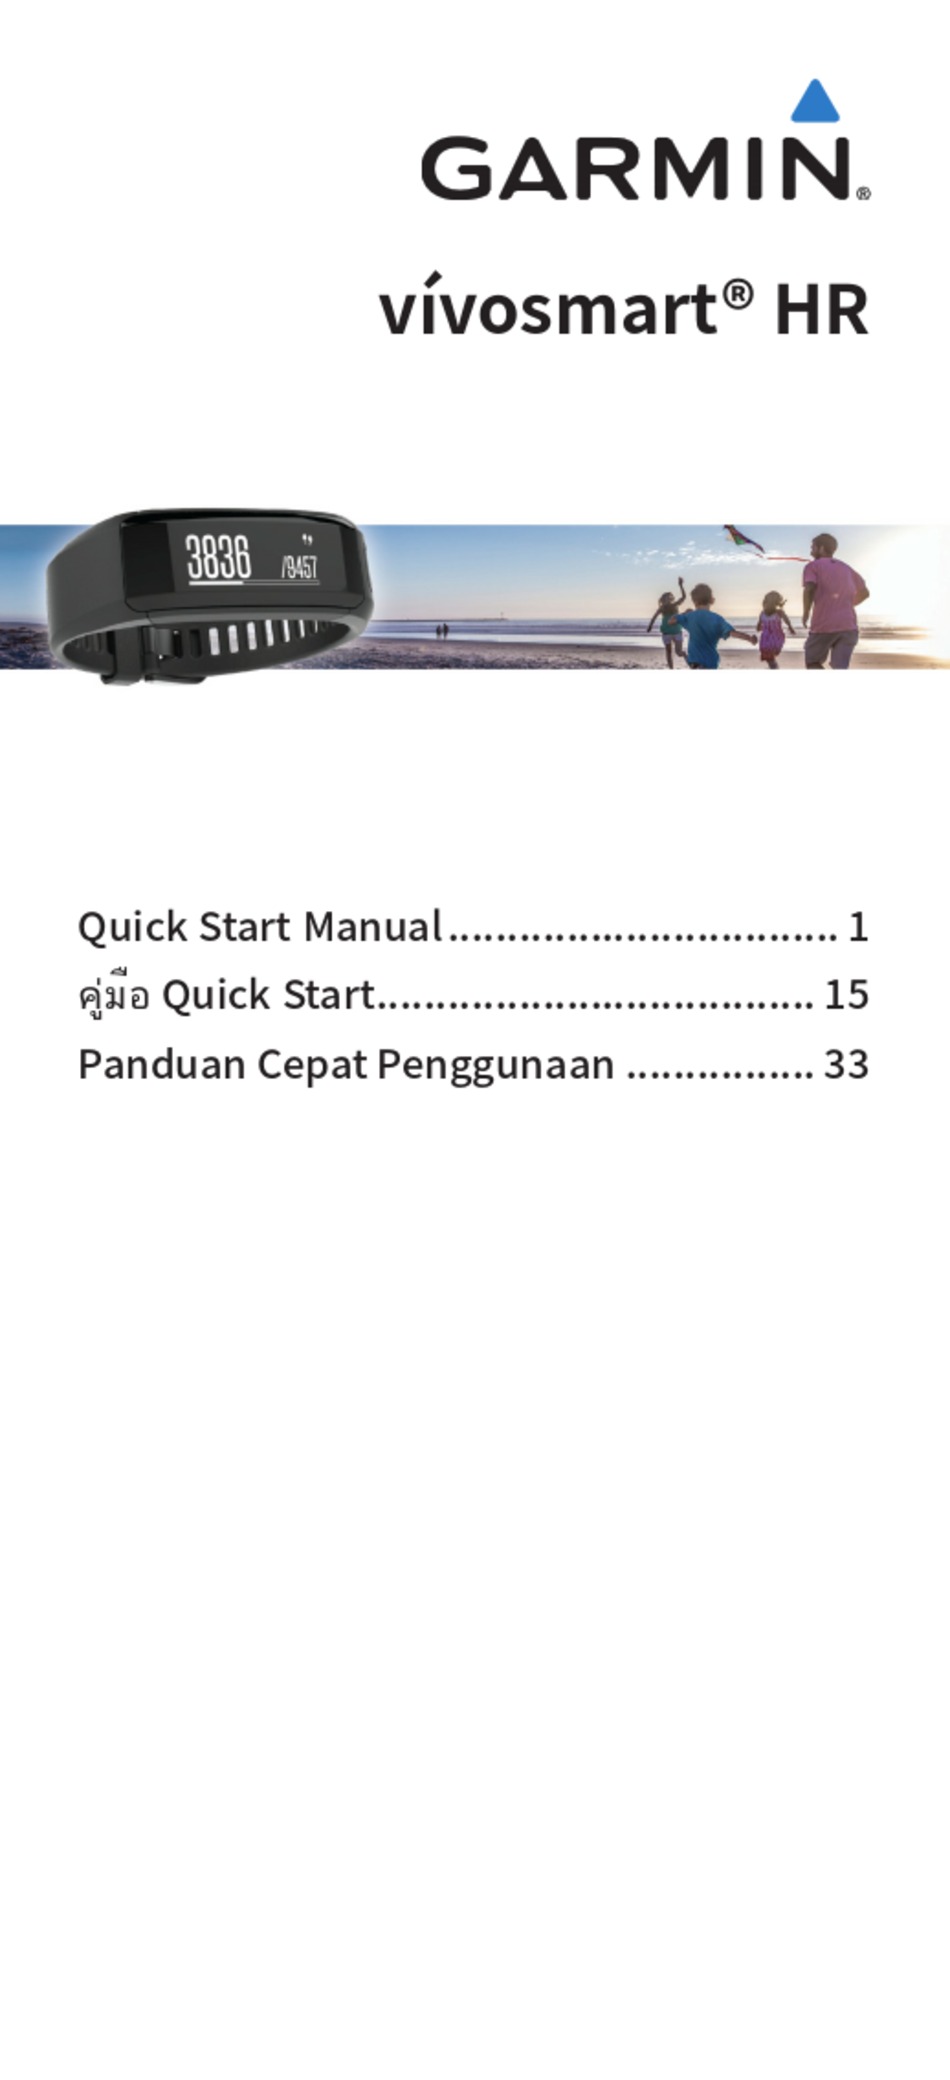 Device Information; Temperature Specifications - Garmin vivosmart HR Quick Manual [Page 15]